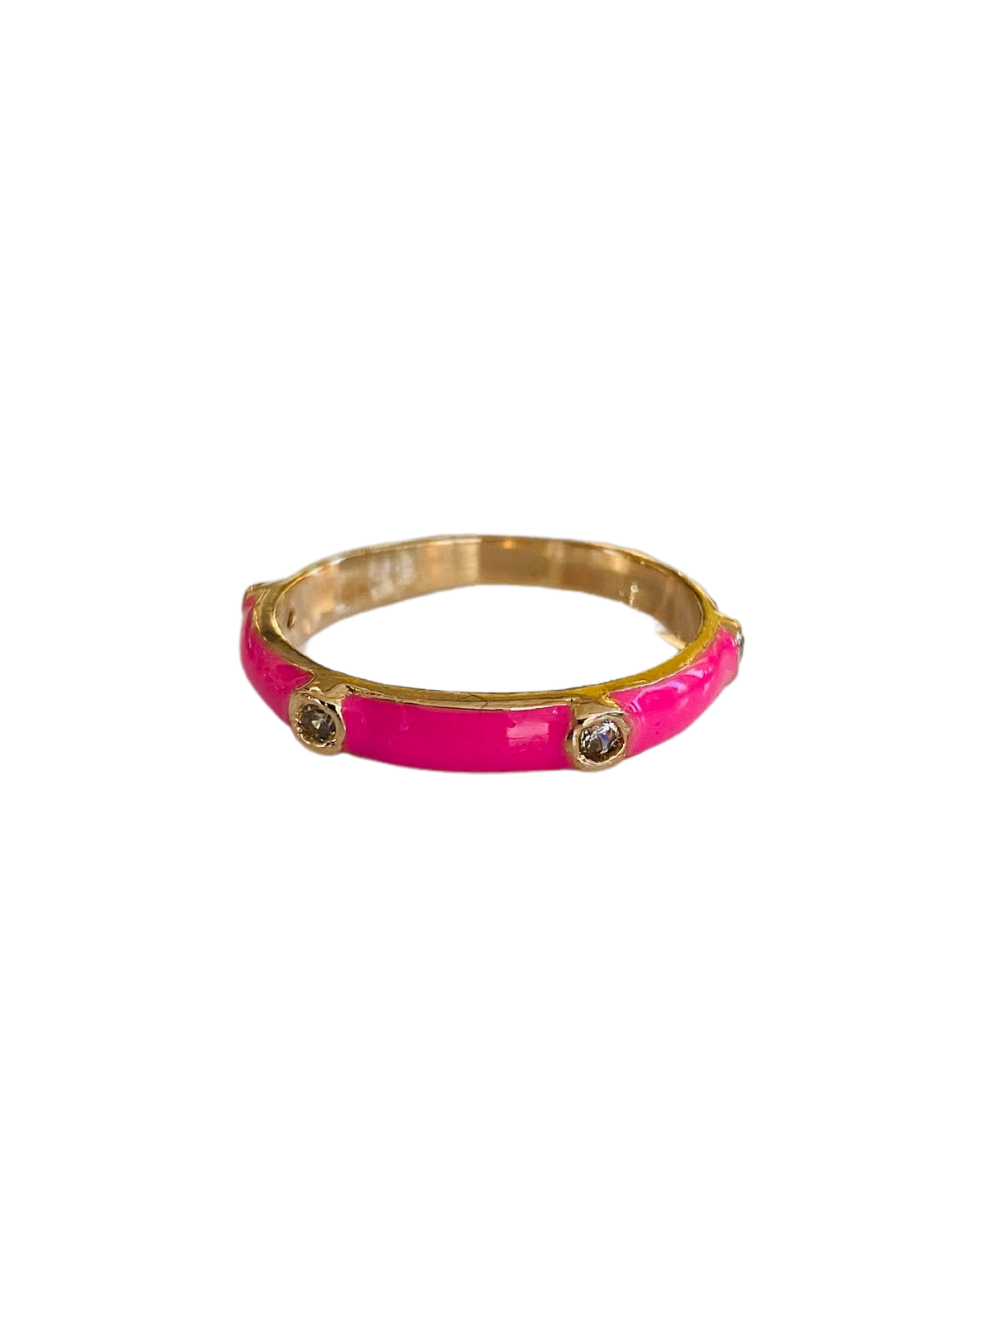 Pink Rhinestone Gold Filled Ring